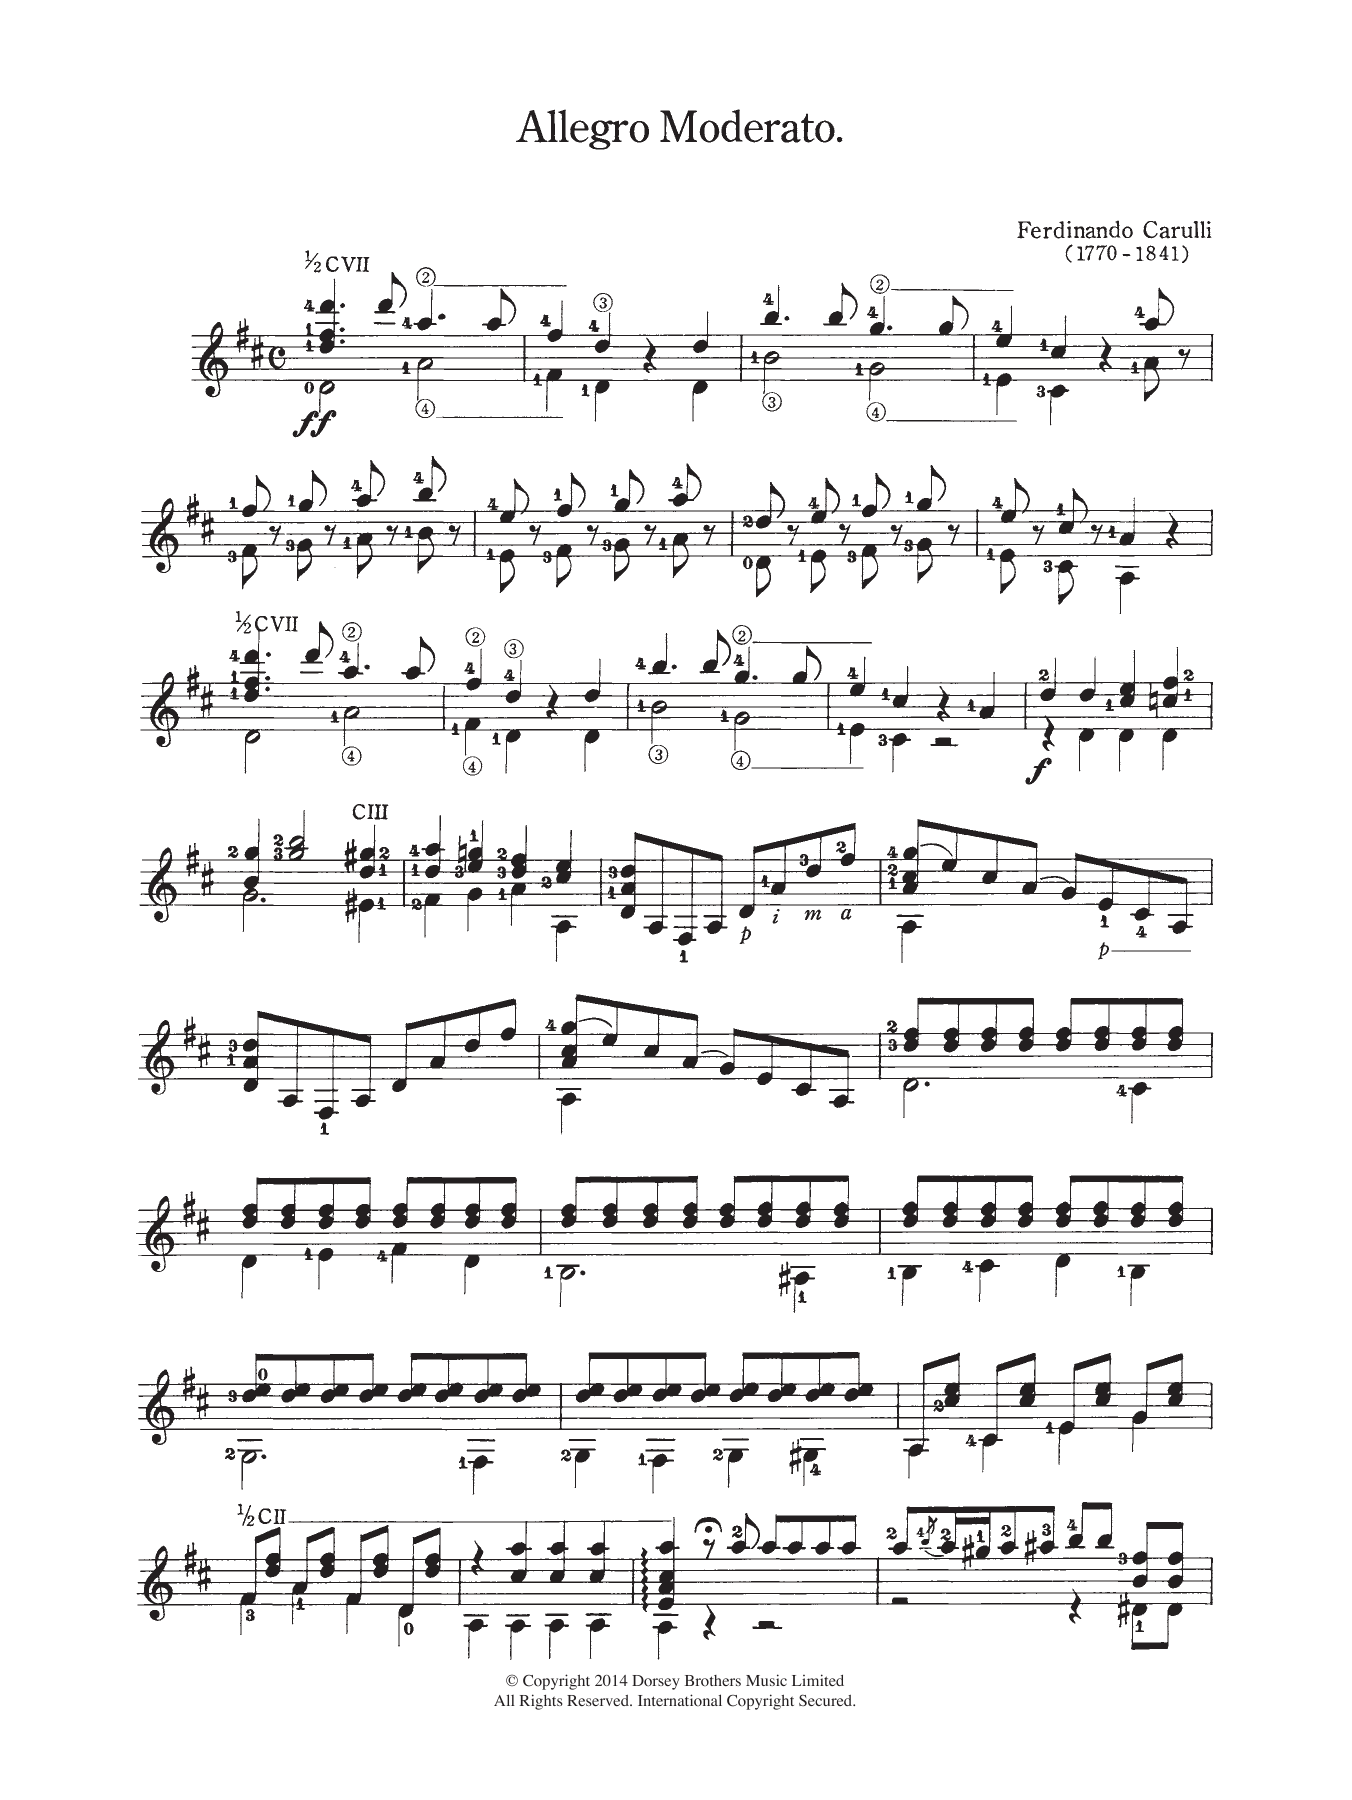 Ferdinando Carulli Allegro Moderato Sheet Music Notes & Chords for Guitar - Download or Print PDF